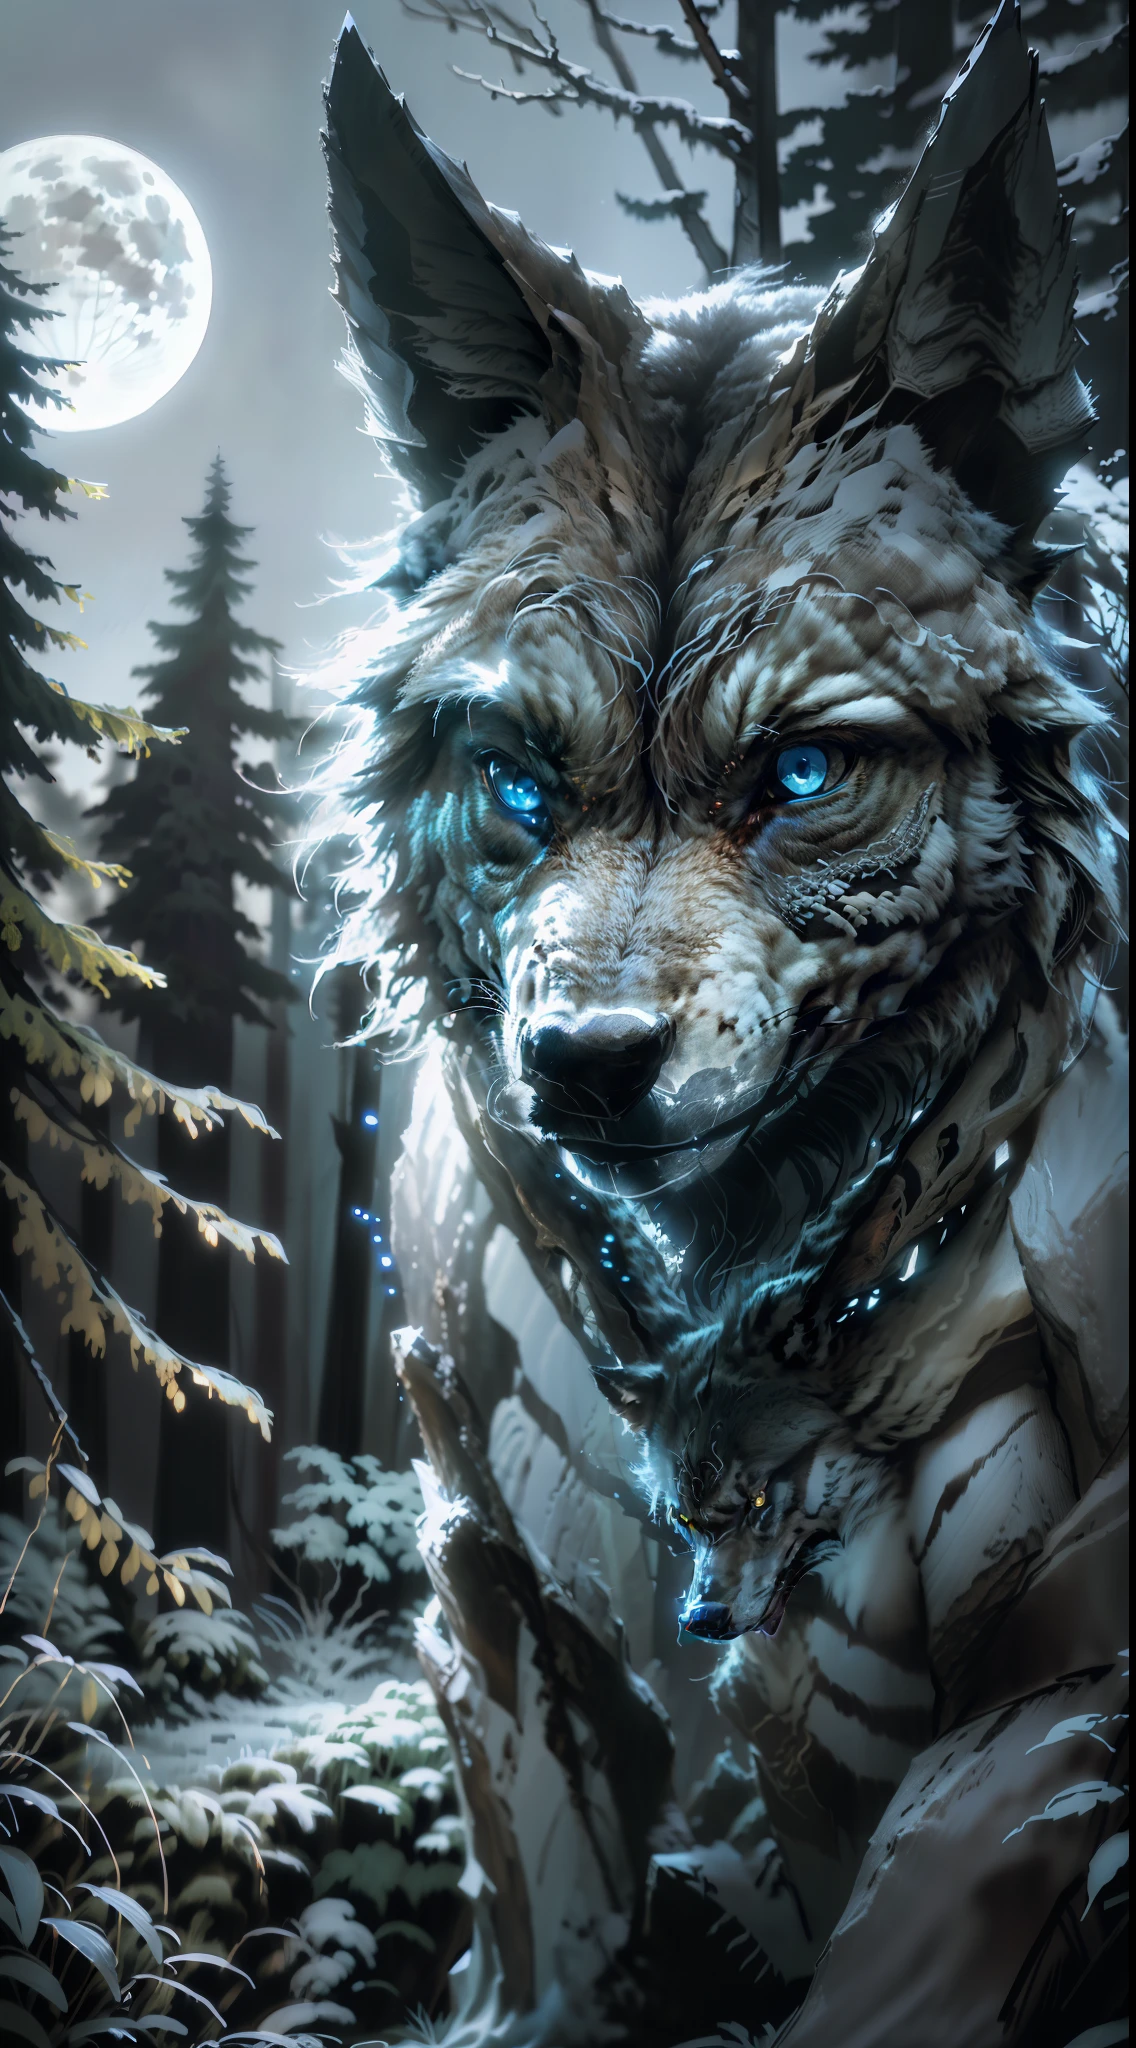 (4k, 人类发展报告, 图像焦点) 一群狼, 有色 "黑色的, 白色的, 蓝色的". 夜森林" 开放森林", 背景中的满月. 狼猎人 (真实感)